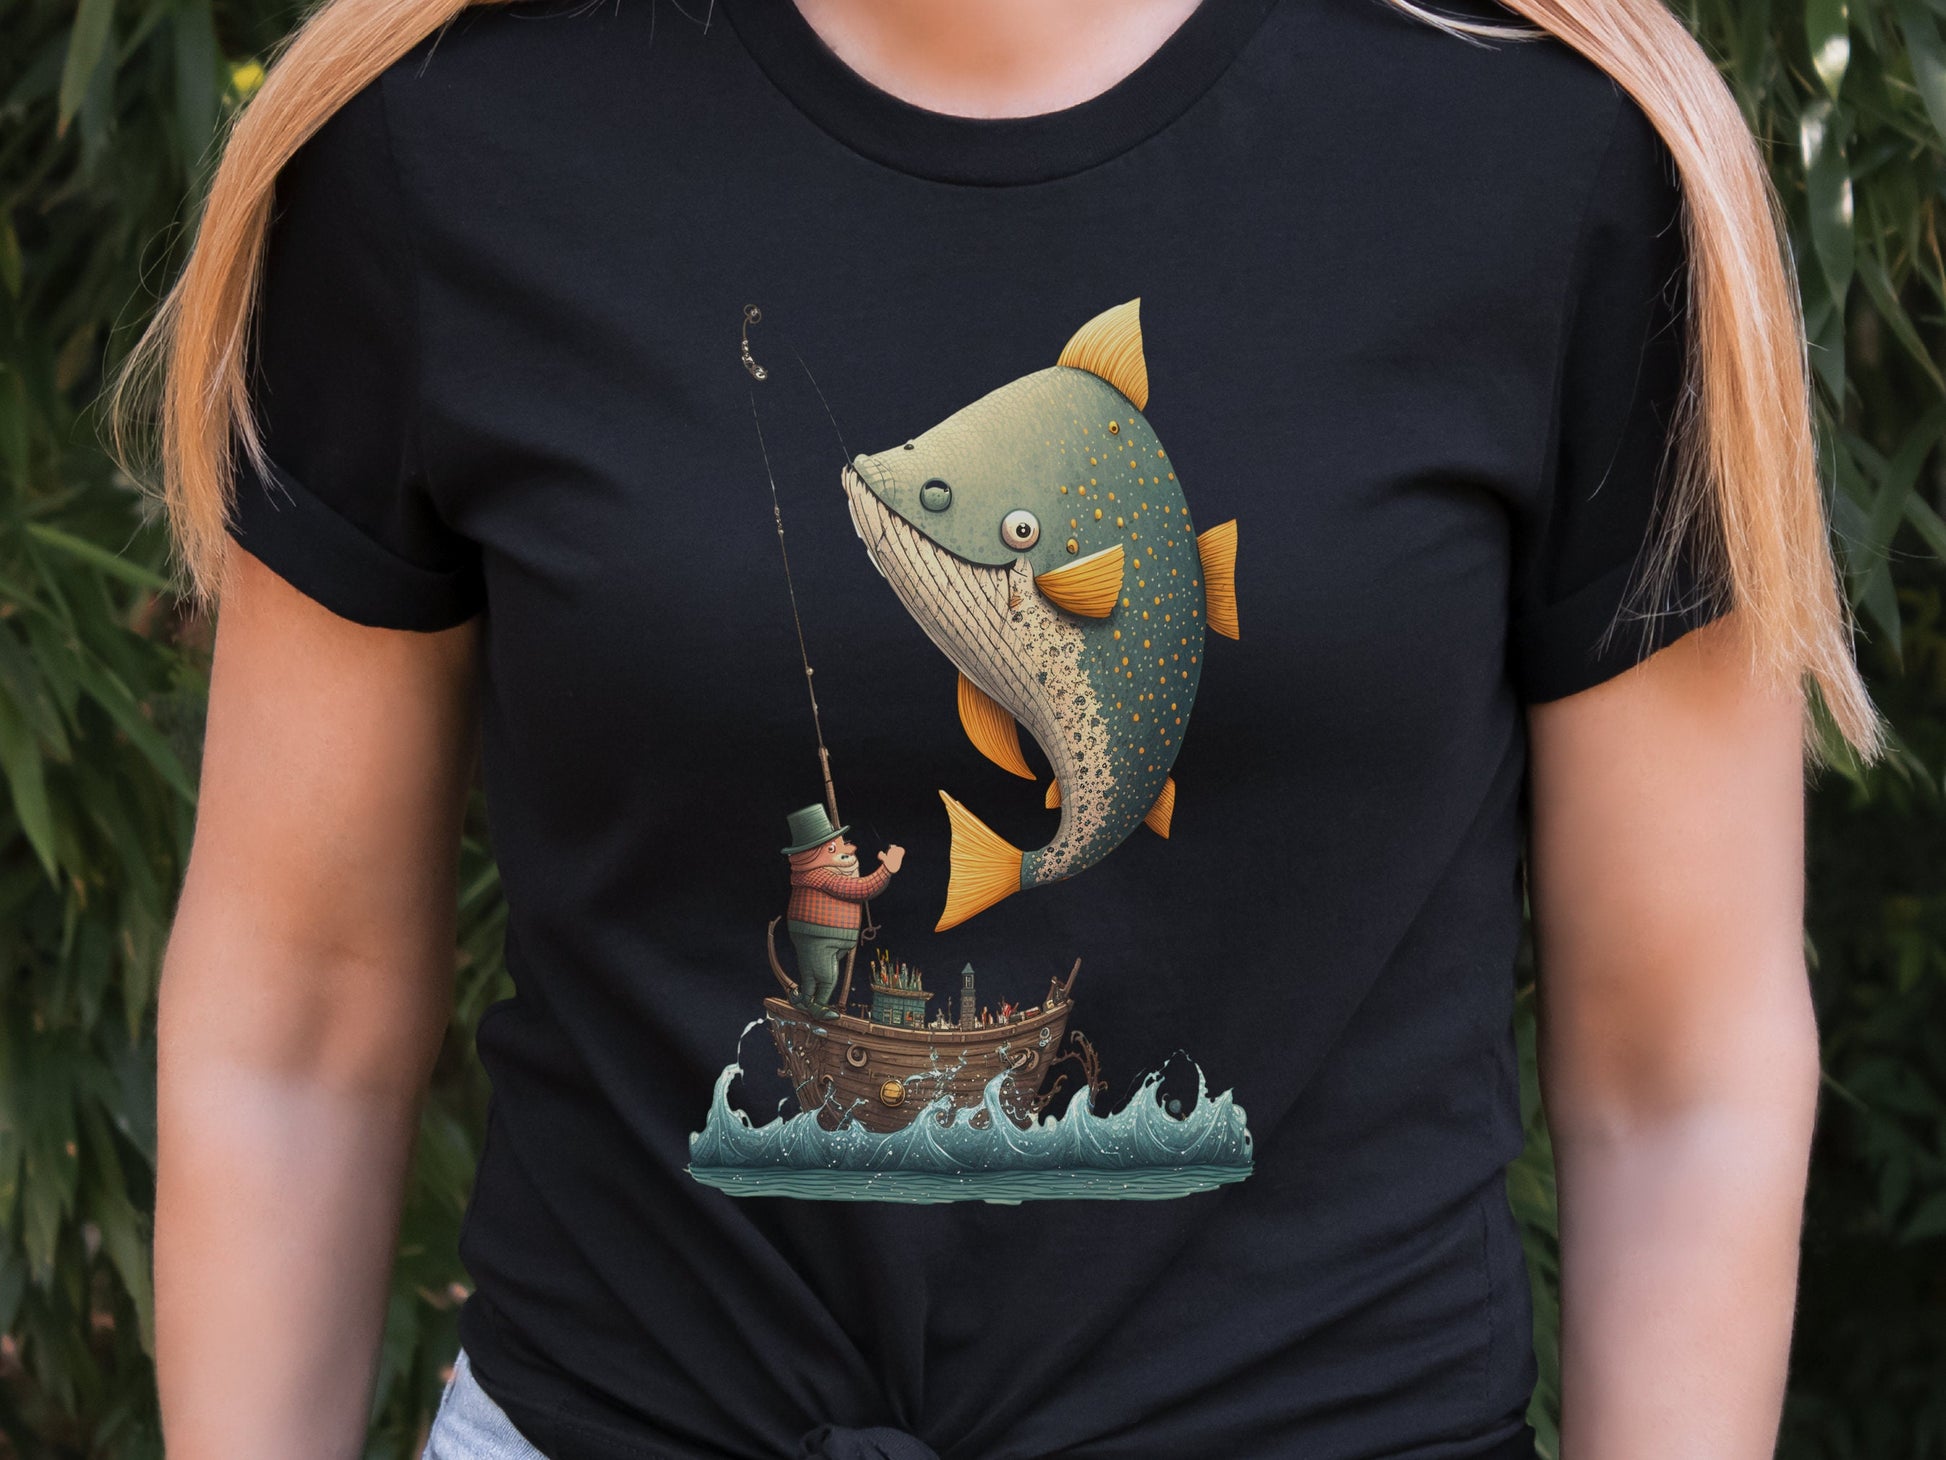 Funny Fishing Shirt for Women Fishermans T-Shirt Big Fish Small